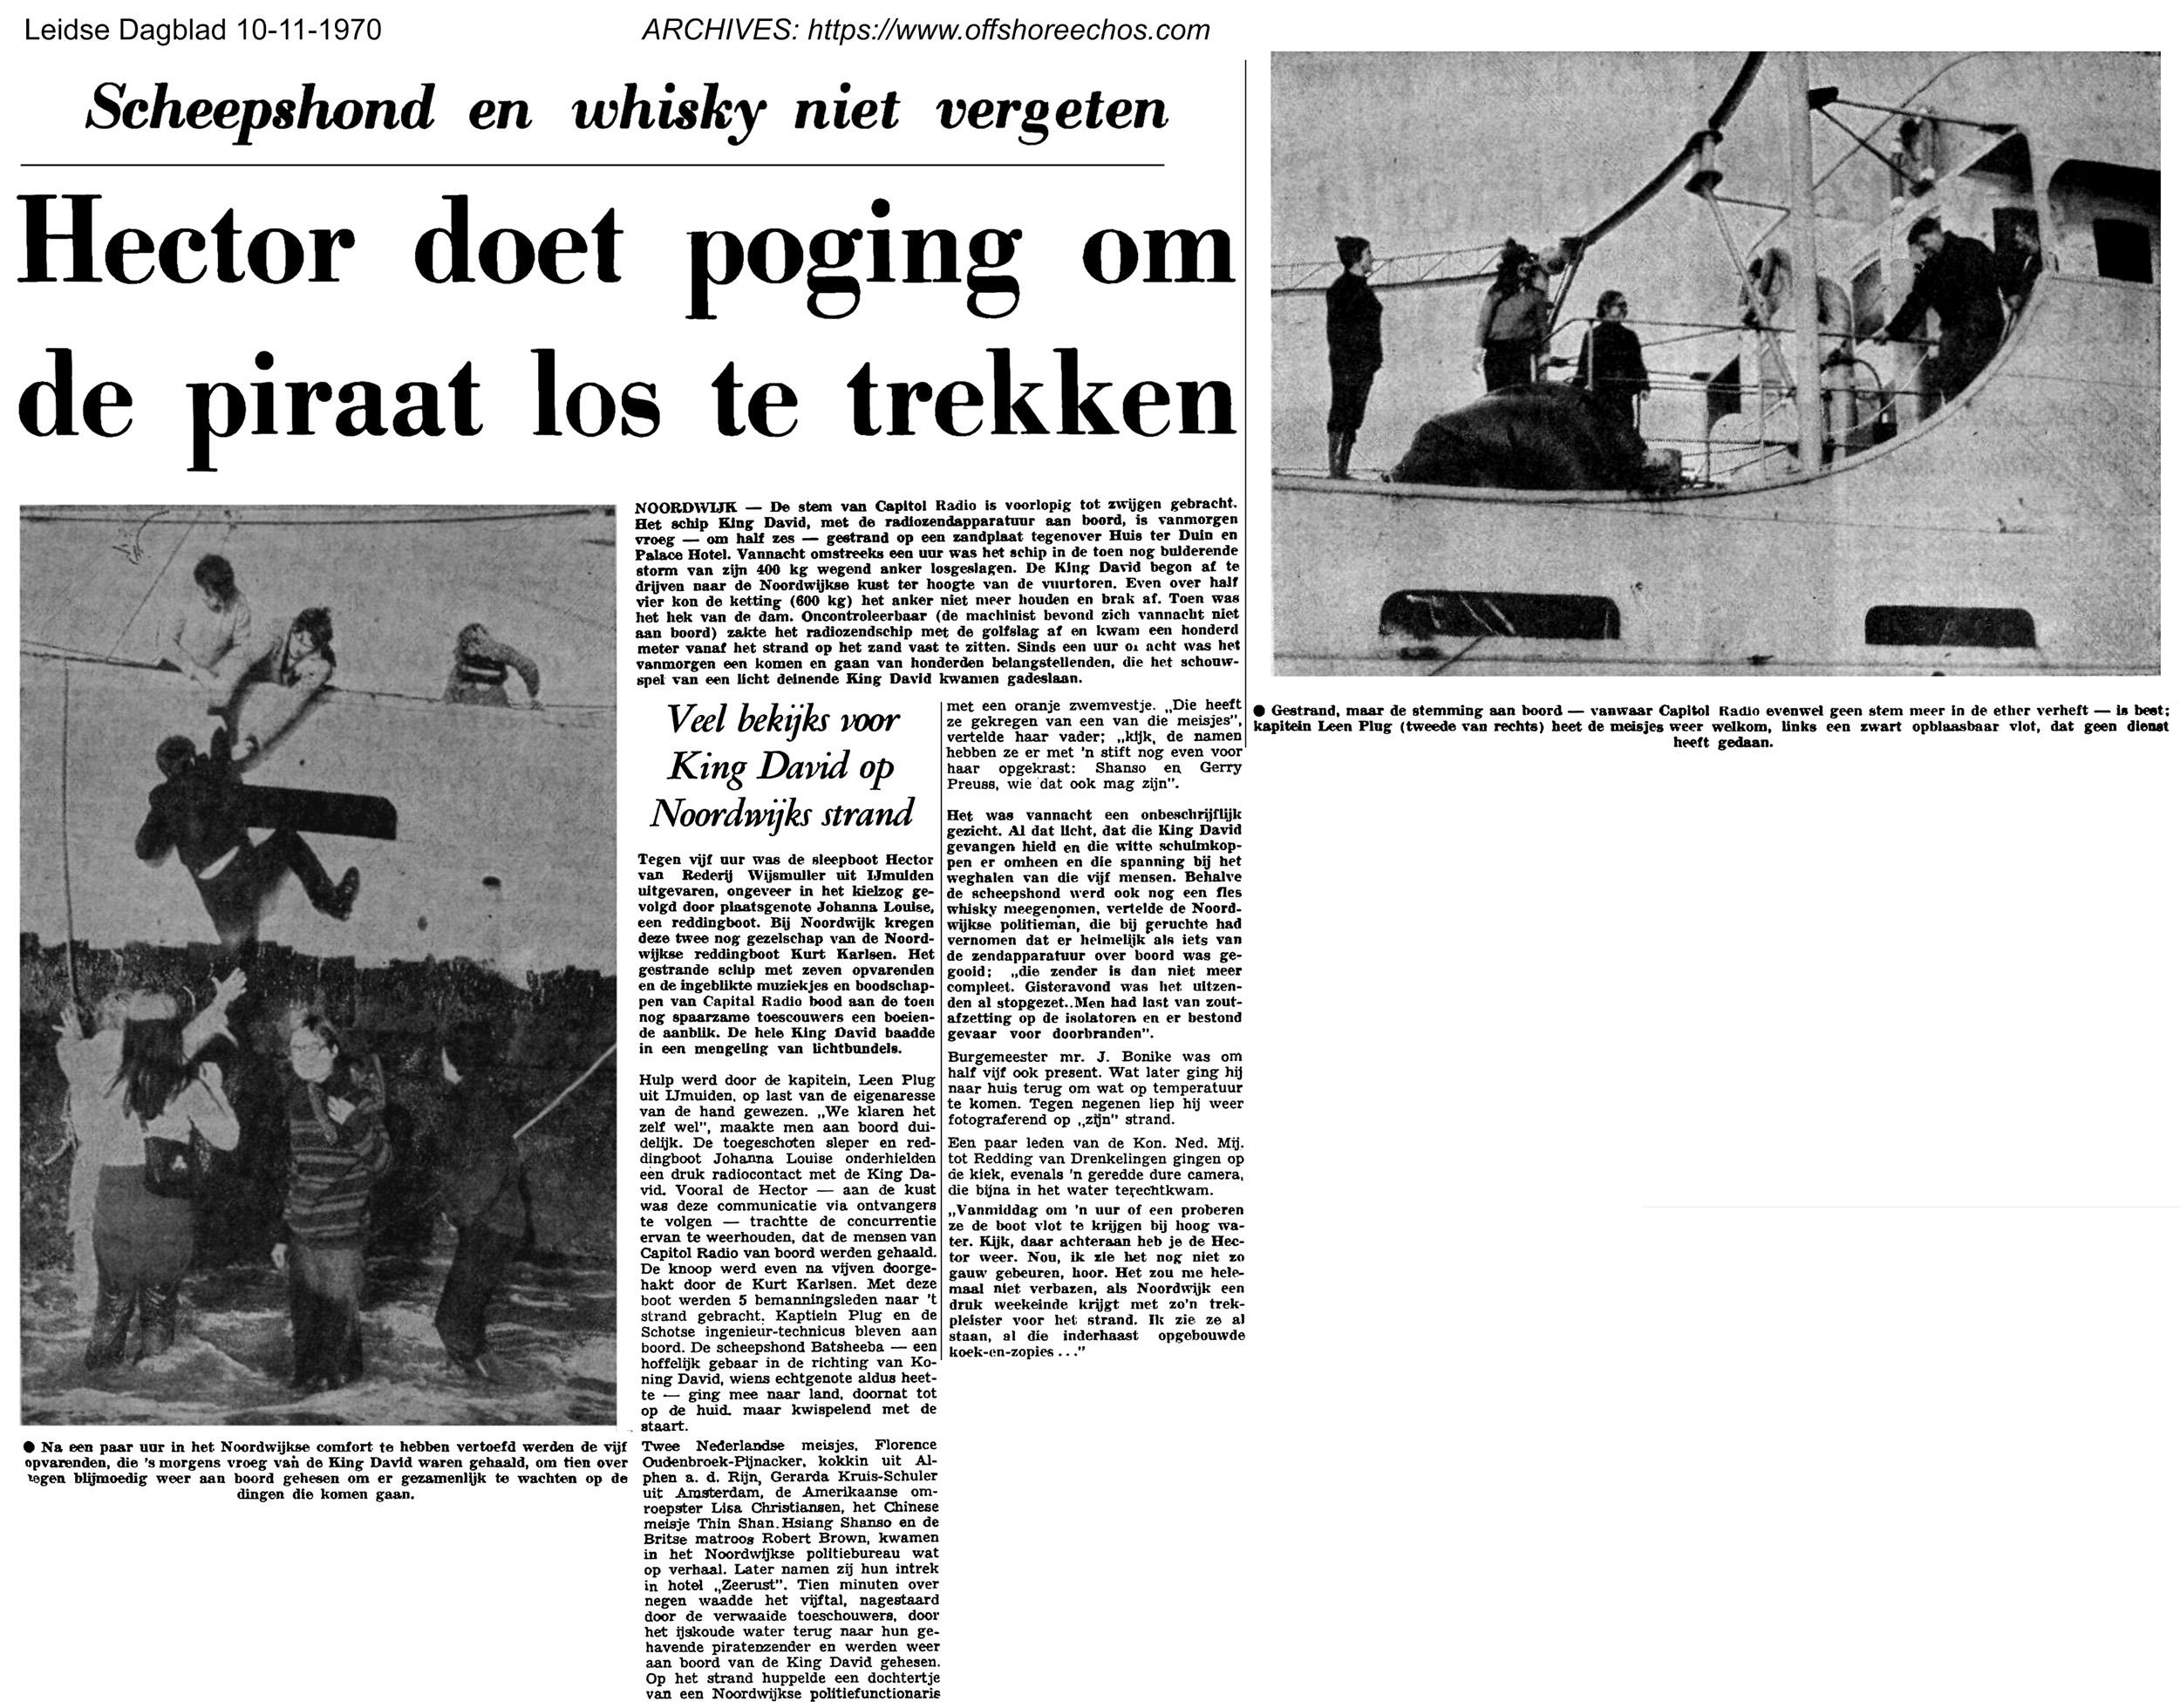 19701110 Leidse Dagblad Hector doet poging om de piraat los te trekken.jpg